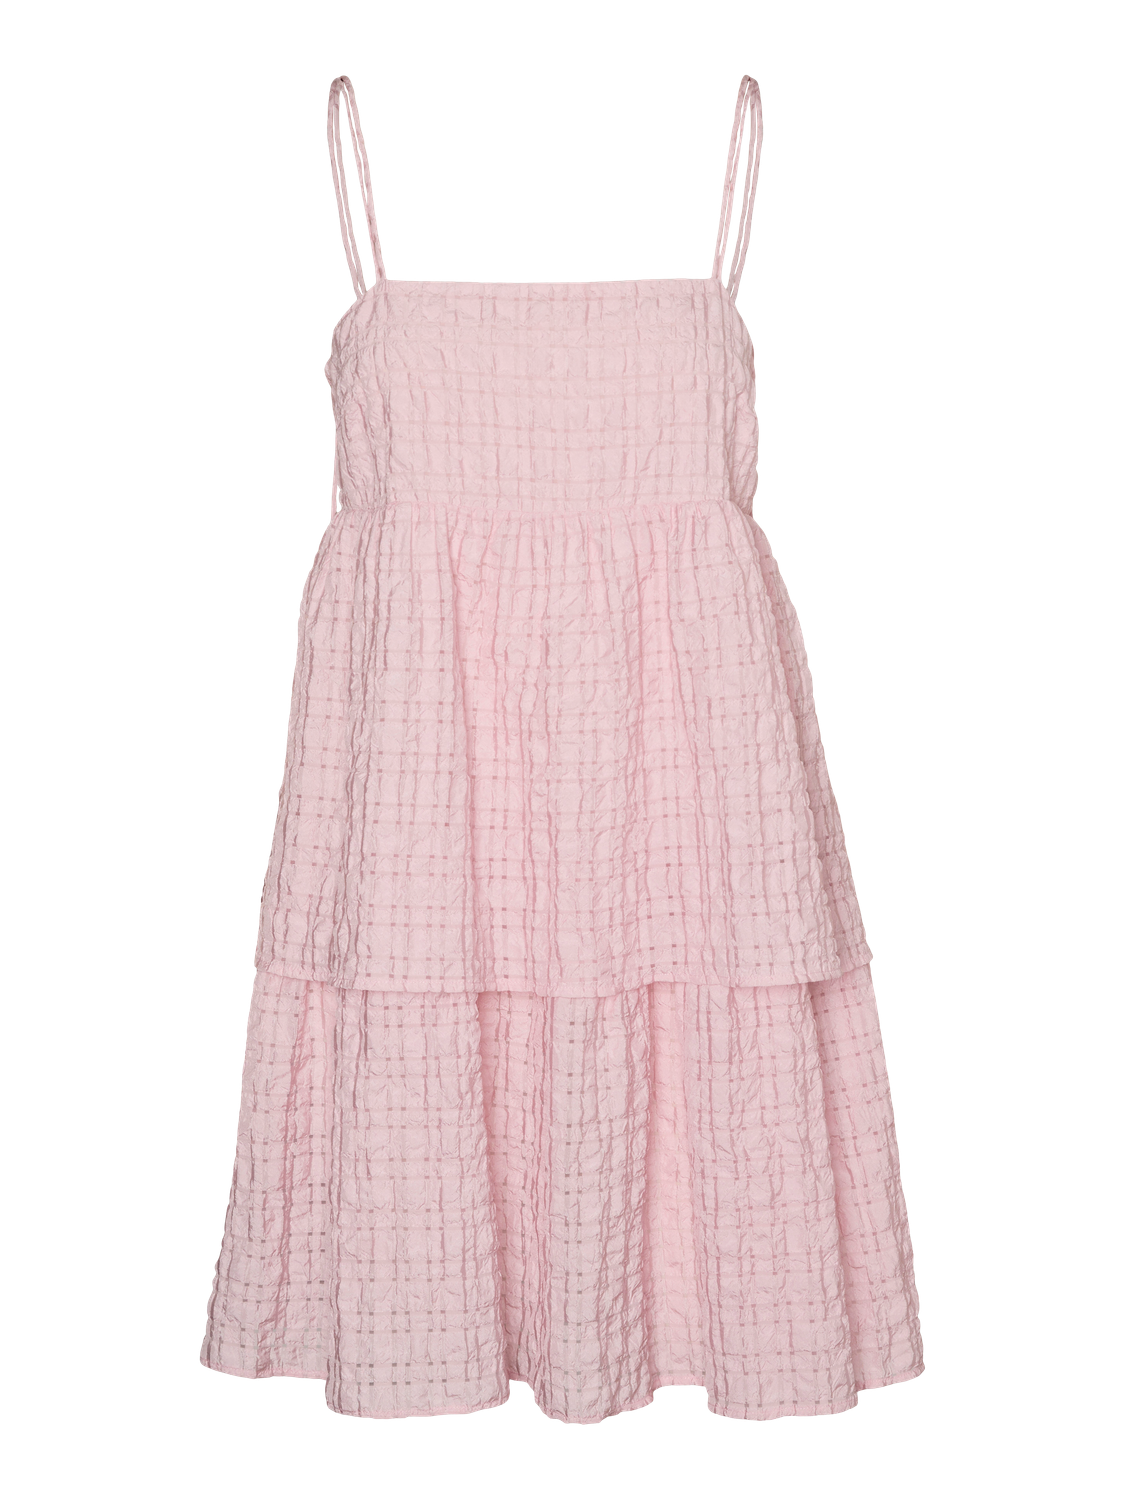 VMLOVE Dress - Cherry Blossom